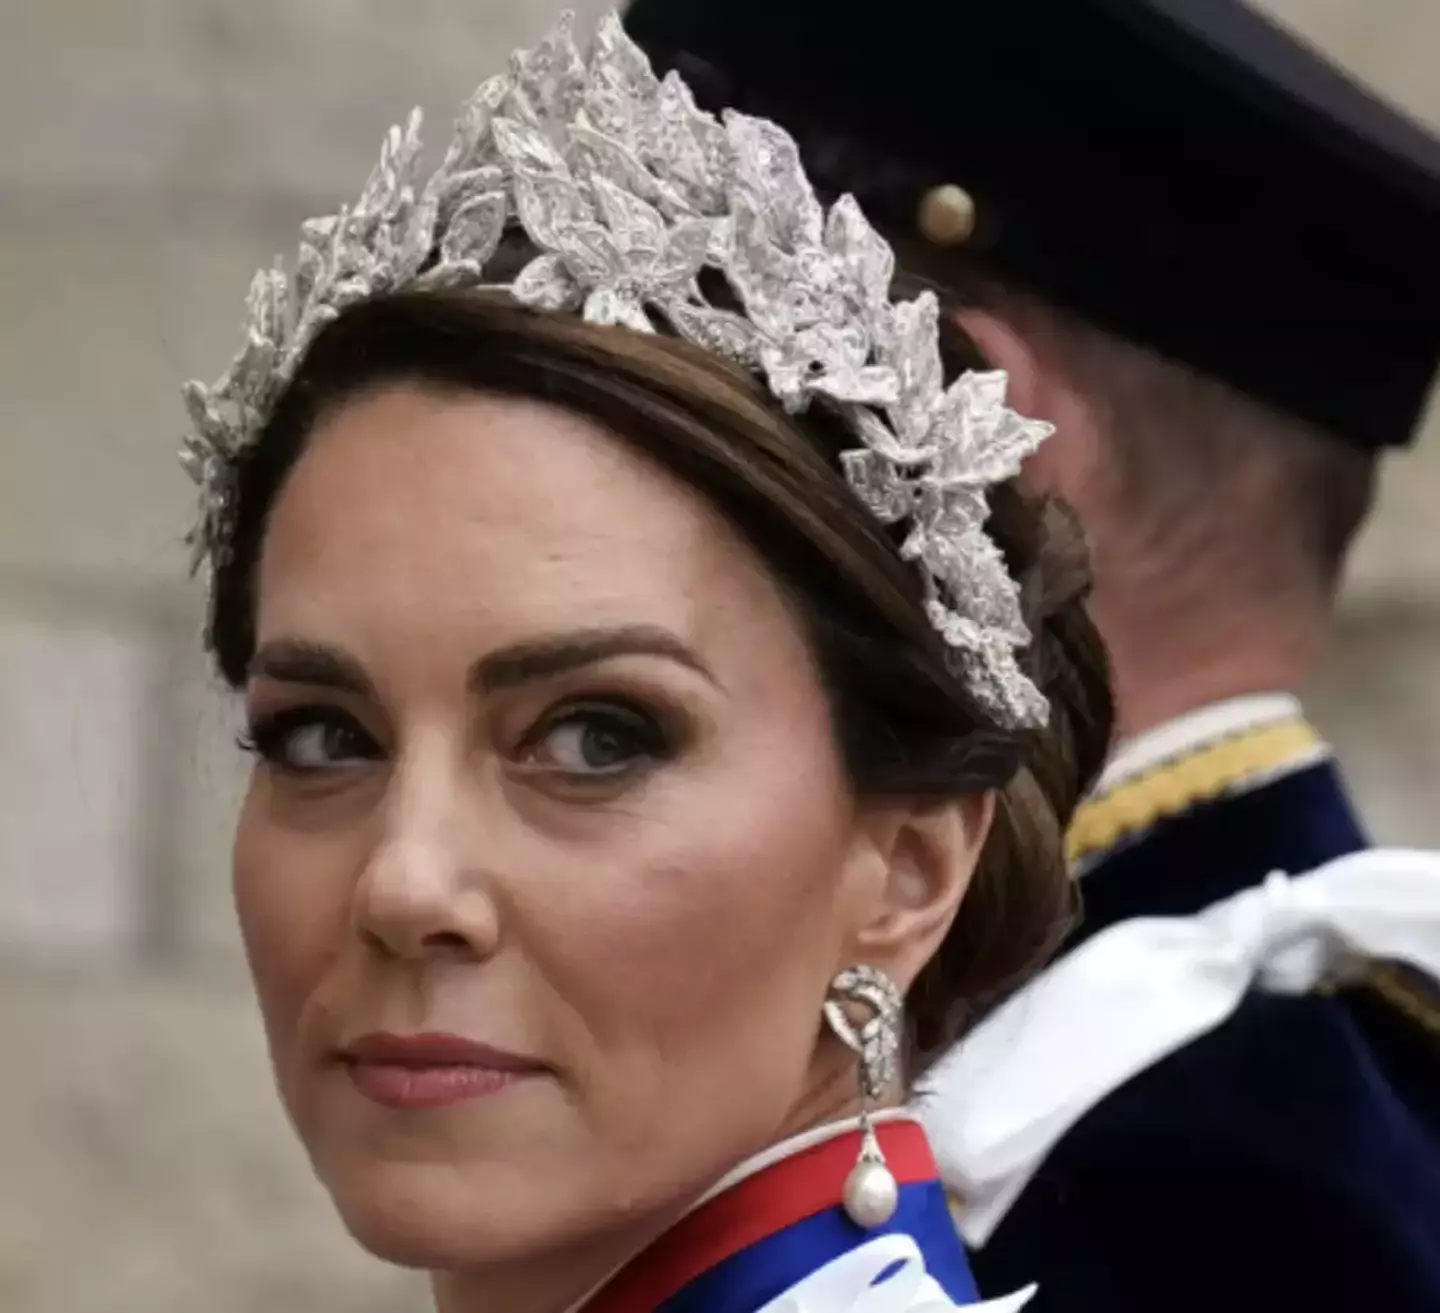 Princess Charlotte wore a matching headpiece with her mum Princess Kate.